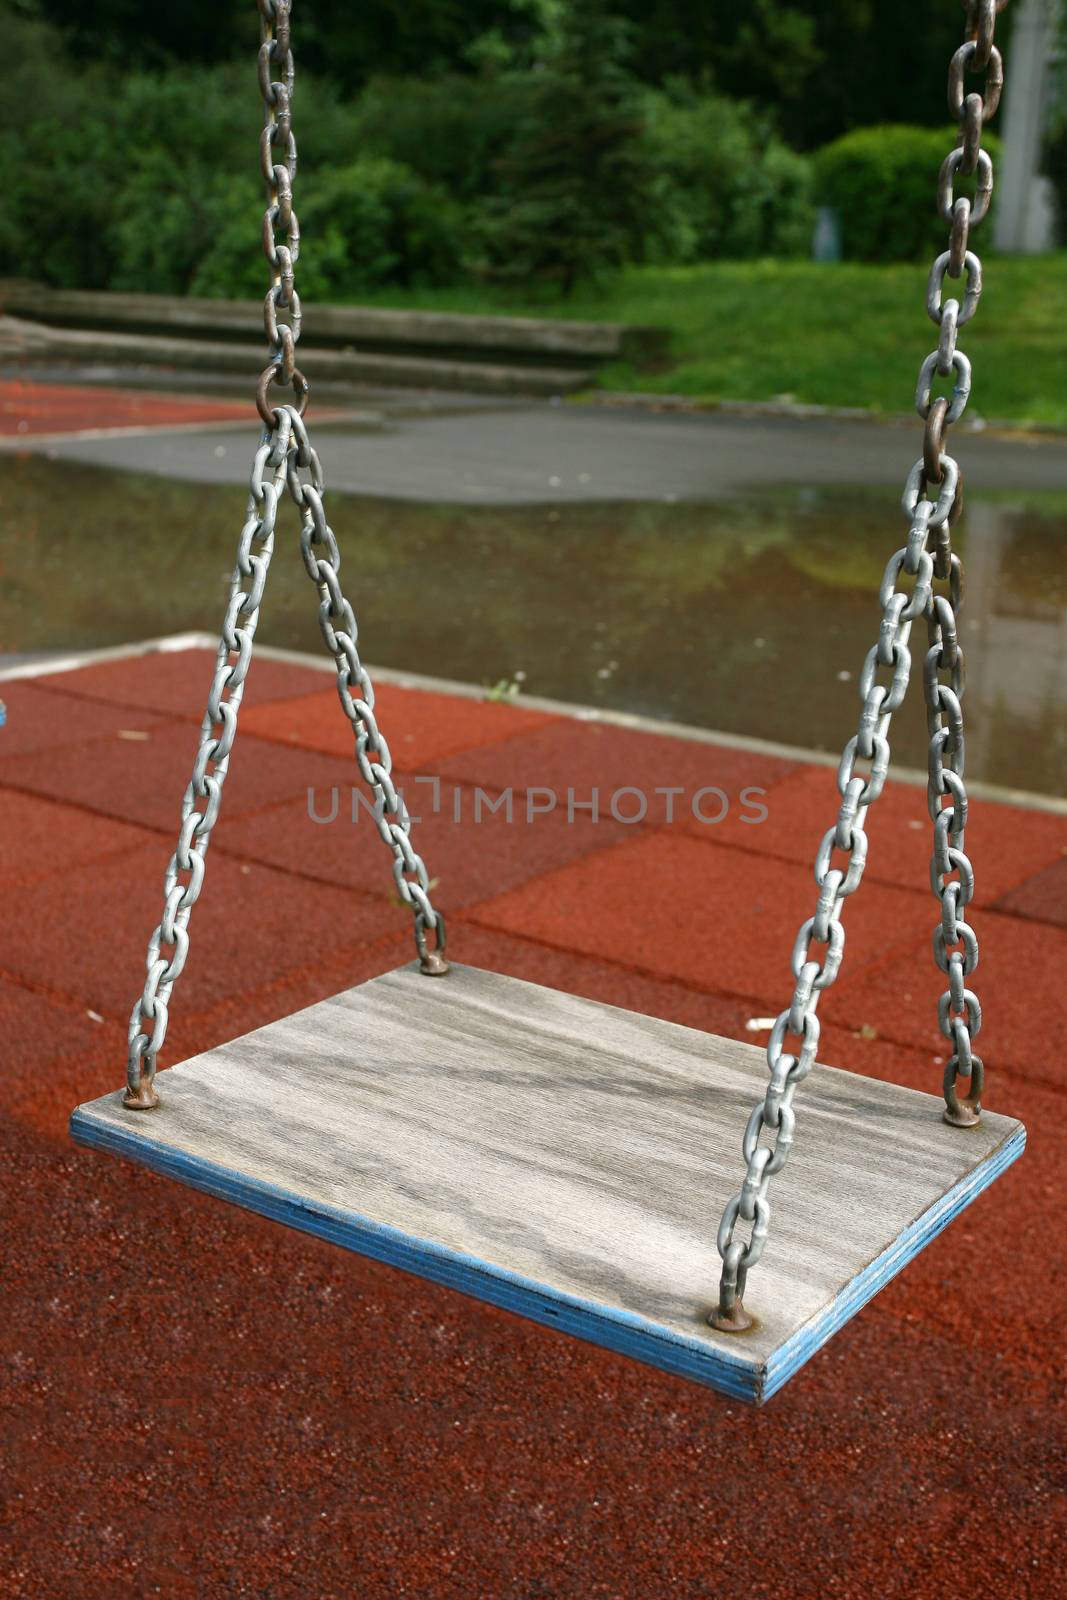 playground children's child chain swings on summer kids playgrou by nemar74